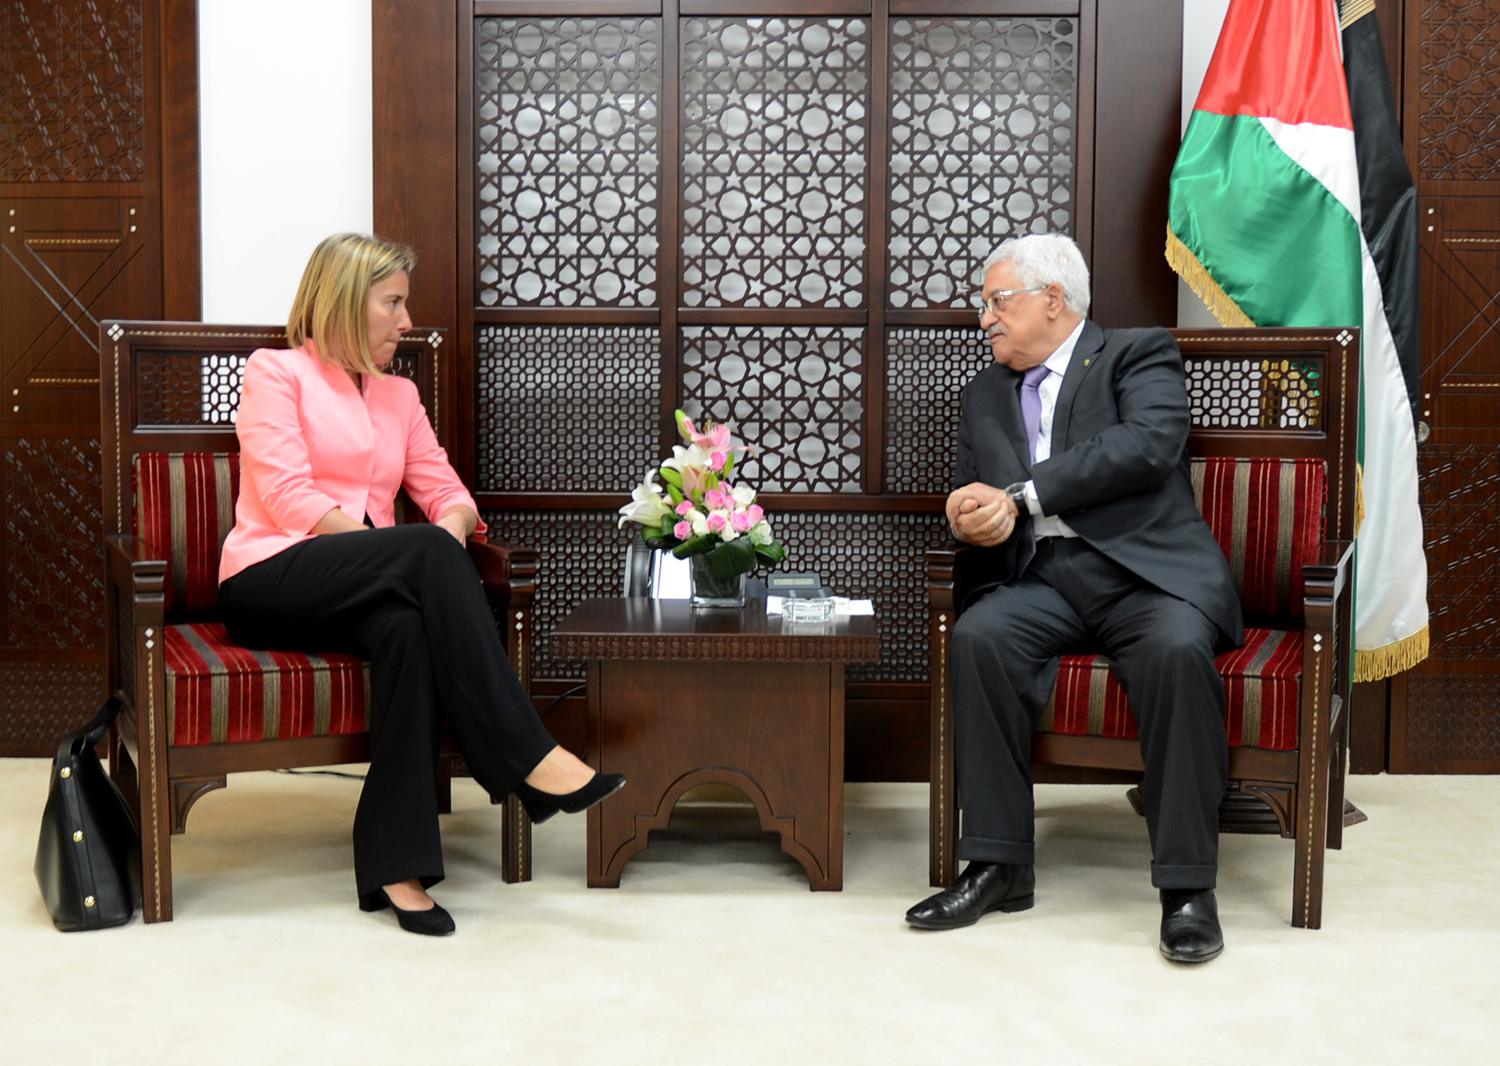 Palestinian President Mahmoud Abbas receives European Union (EU) foreign policy chief Federica Mogherini